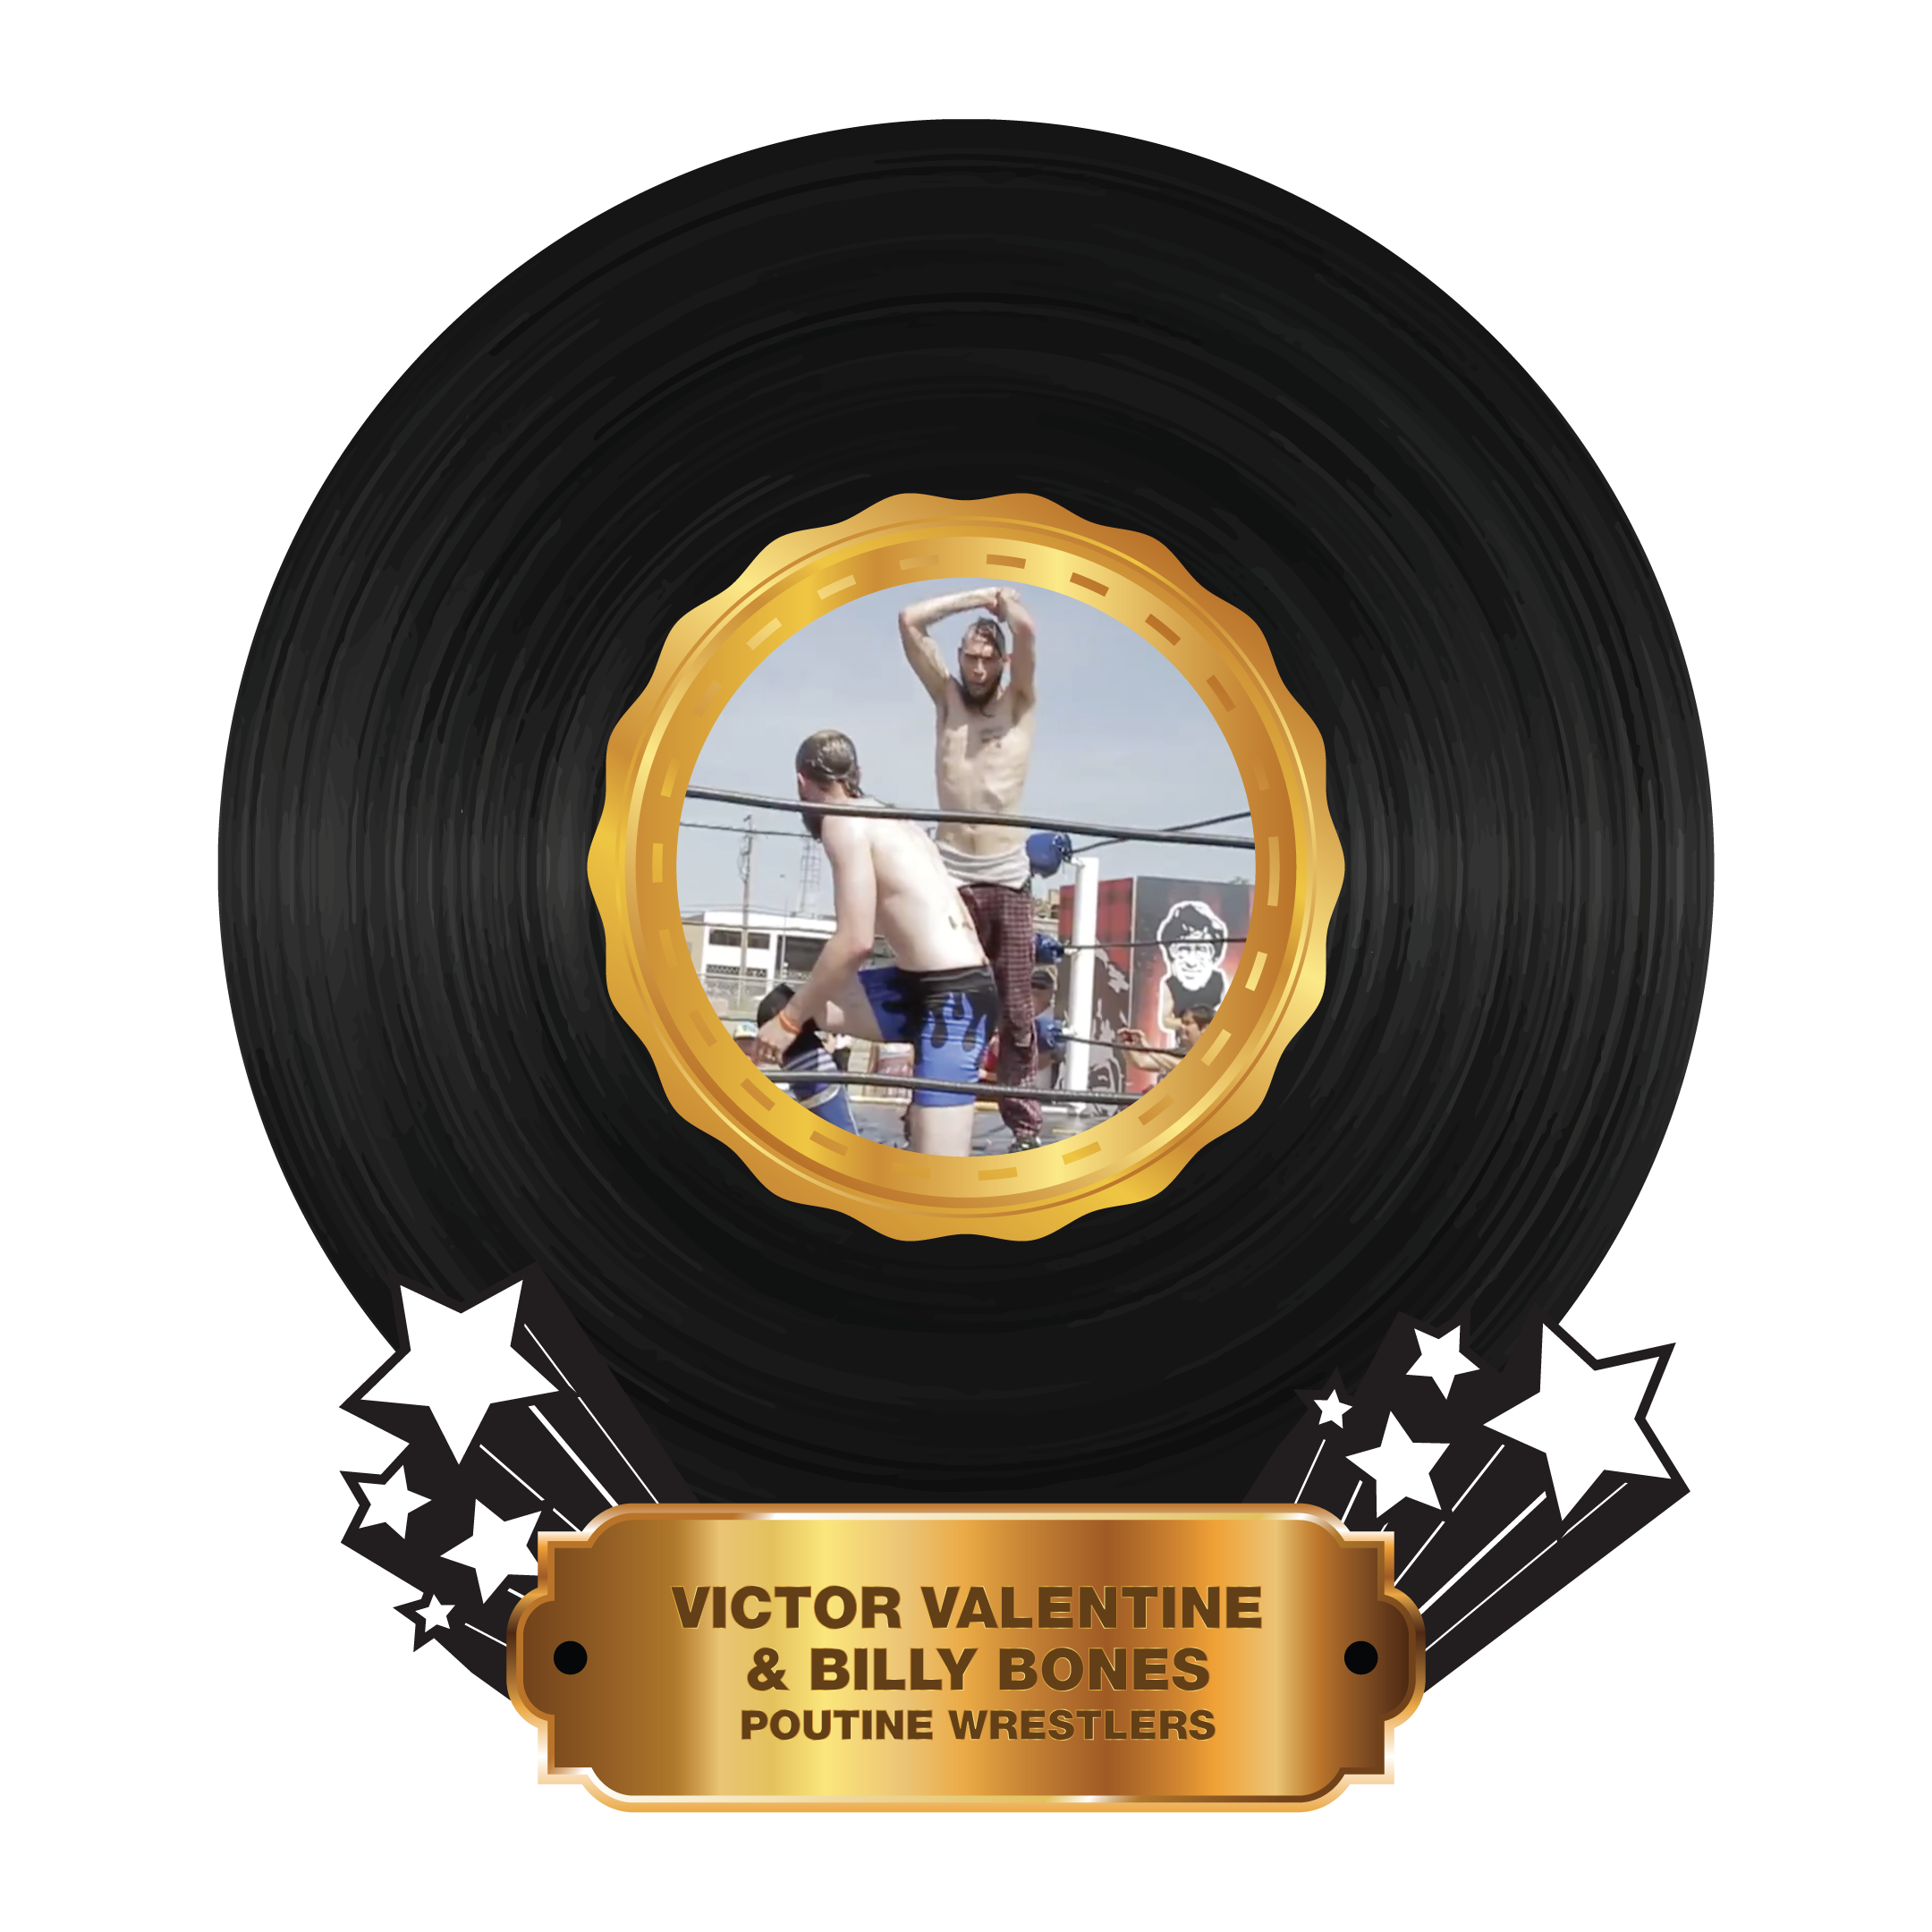 VICTOR VALENTINE & BILLY BONES - Record